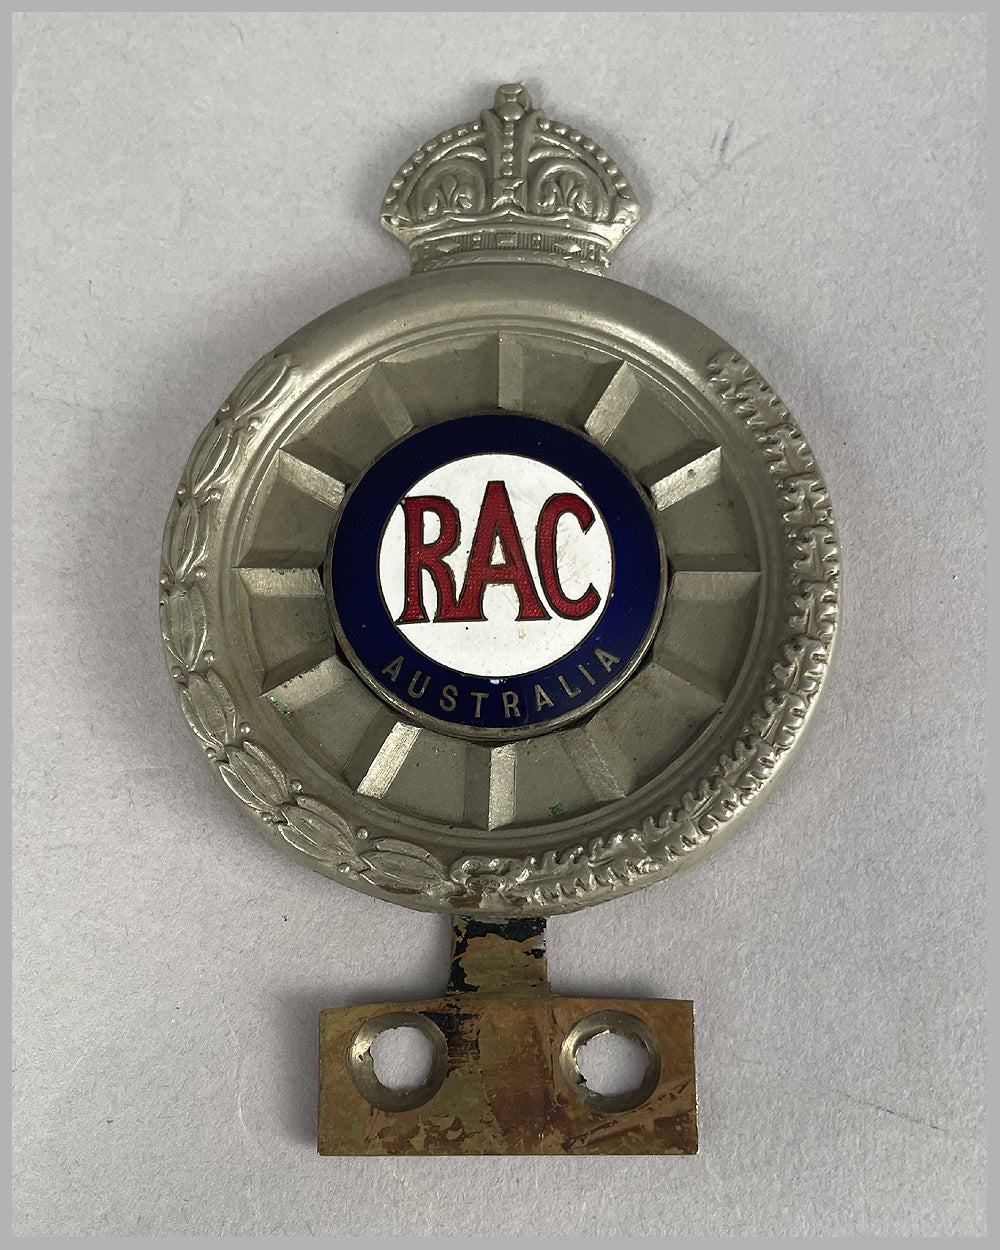 Royal Automobile Club - Australia bumper badge, 1940’s